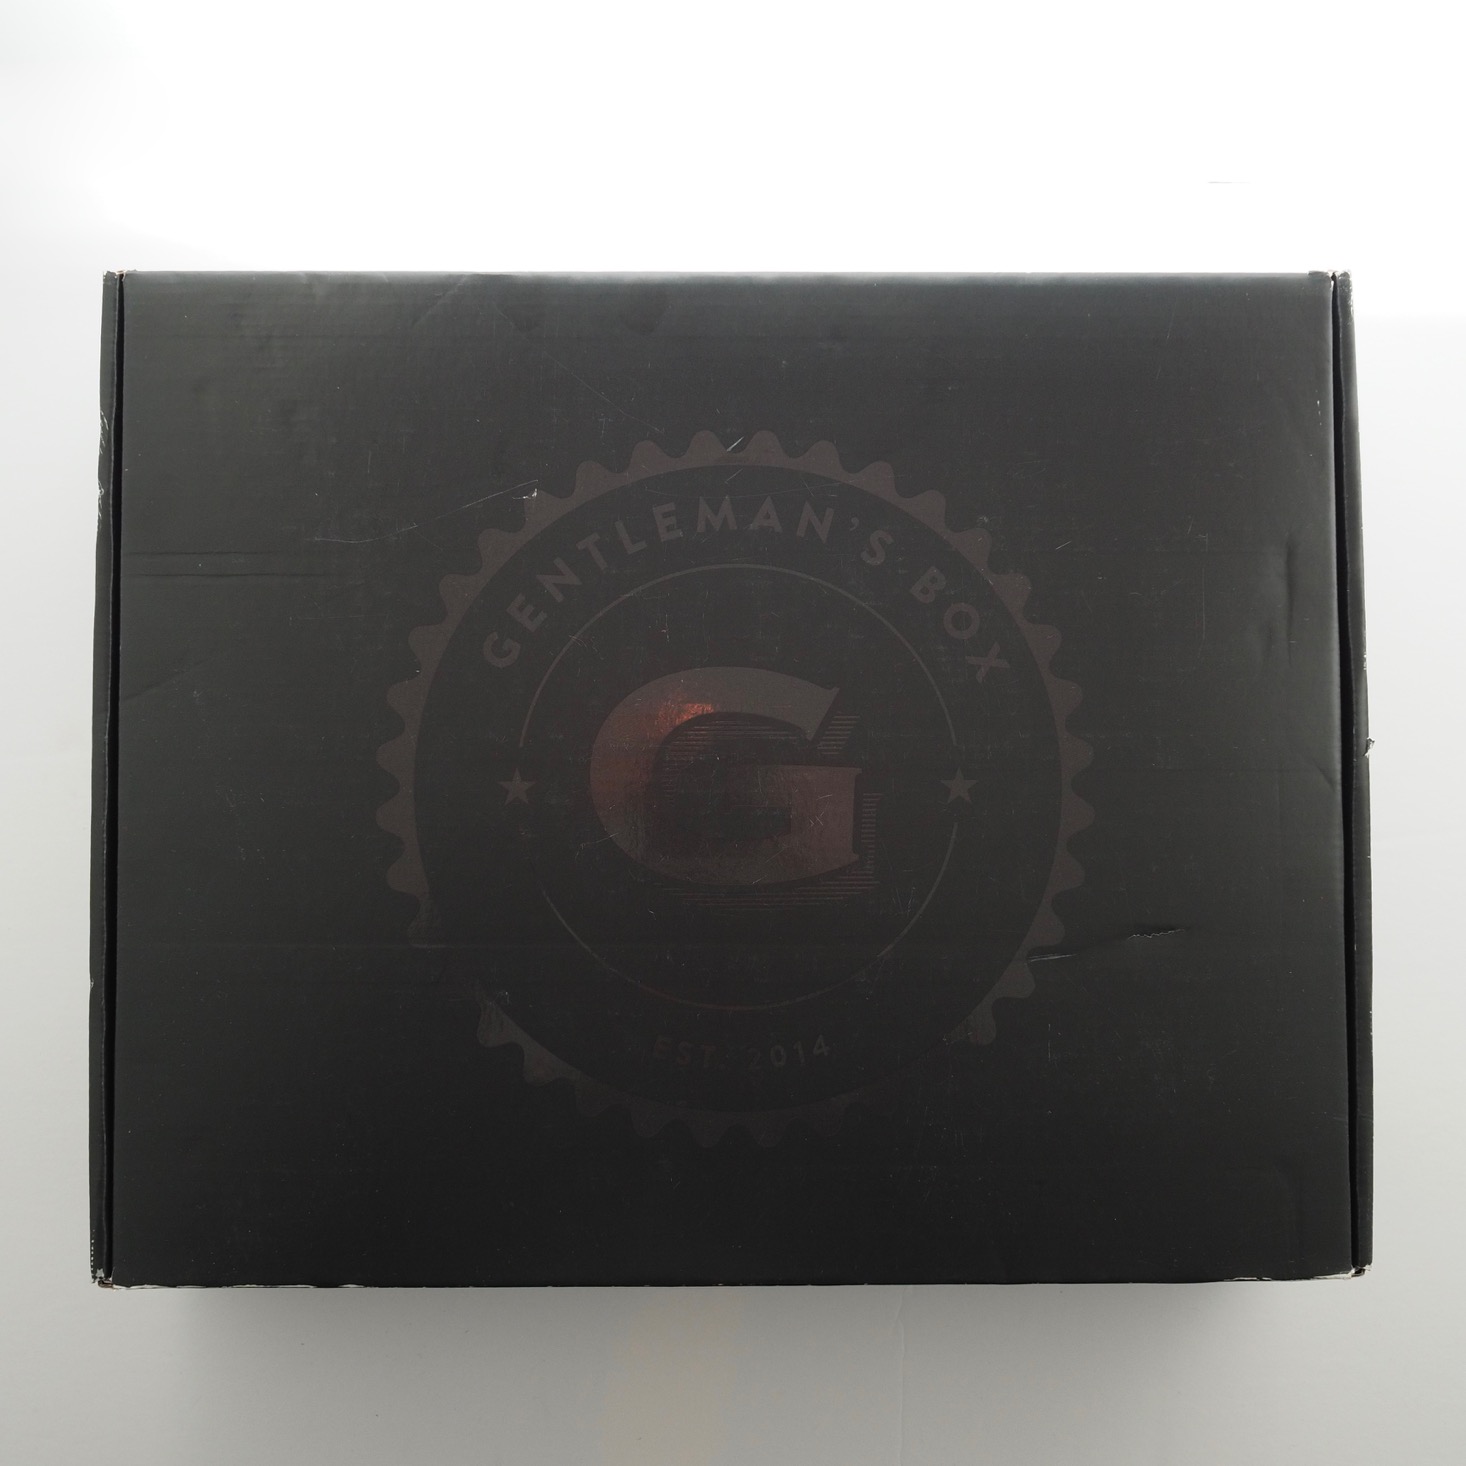 Gentleman’s Box Premium Review + Coupon – Spring 2019